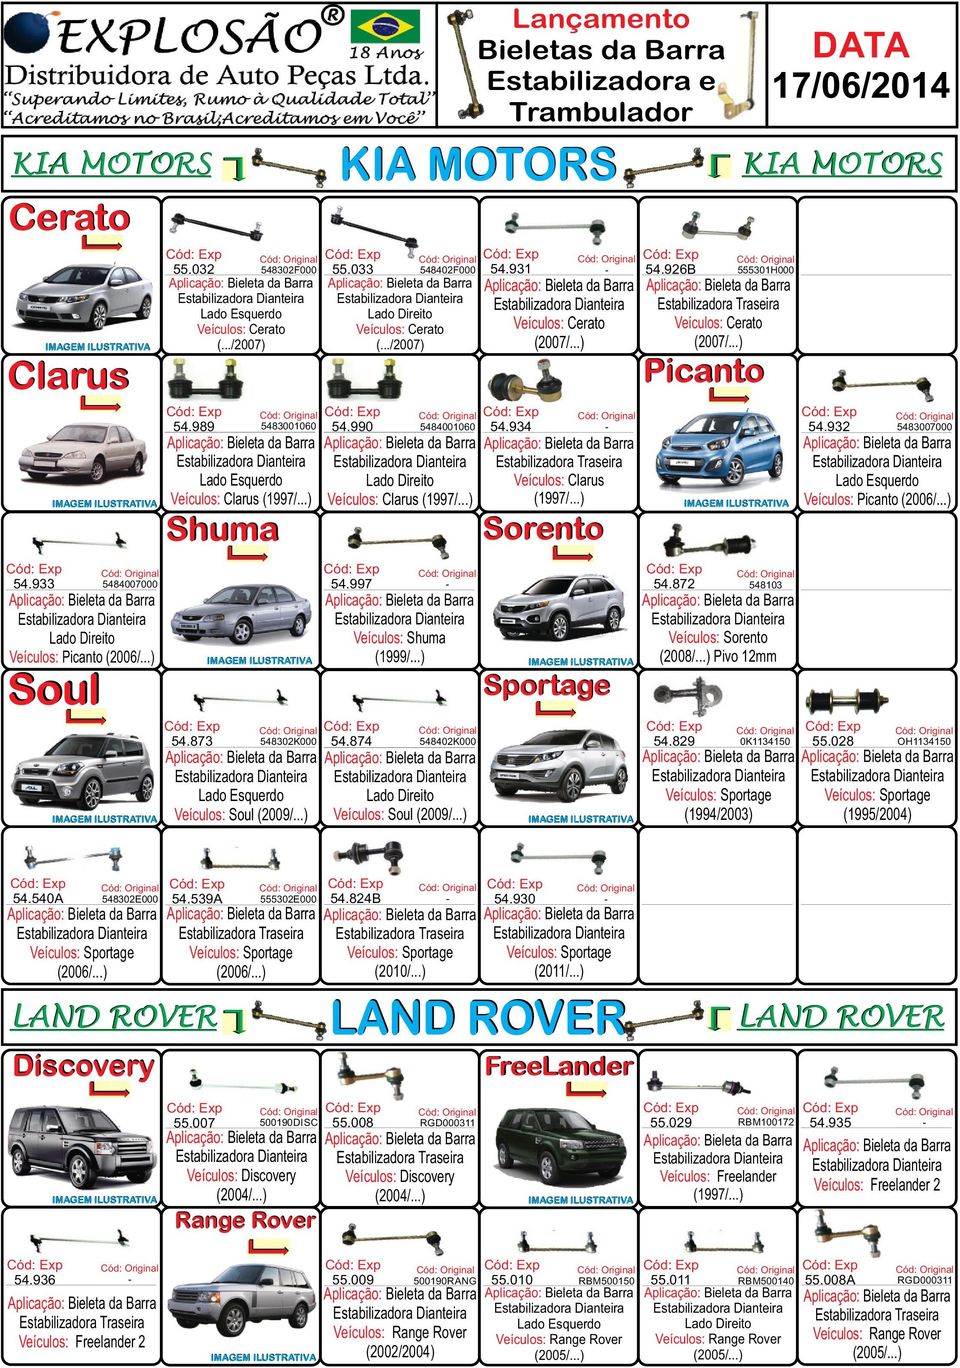 ..) Pivo 12mm Sportage 54.873 54.540A 54.872 Soul 5483007000 Sorento 54.997 5484007000 54.932 Veículos: Clarus (1997/...) Veículos: Clarus (1997/...) Veículos: Clarus (1997/...) Shuma 54.933 54.